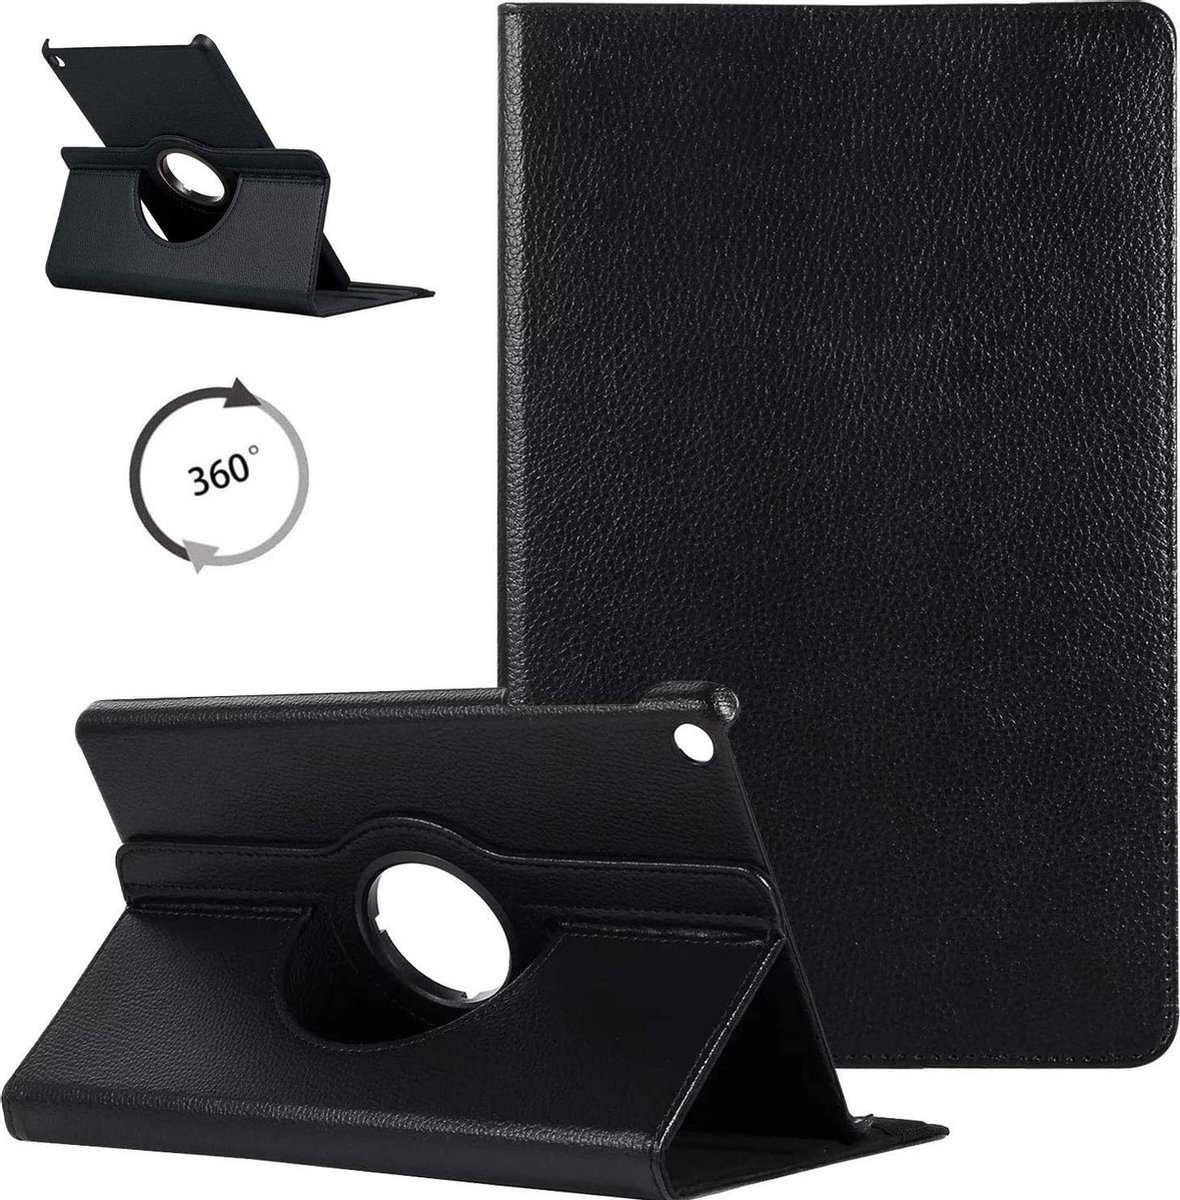 Draaibaar Hoesje - Rotation Tabletcase - Multi stand Case Geschikt voor: Samsung Galaxy Tab S5e 10.5 2019 T720 T725 T727 - zwart